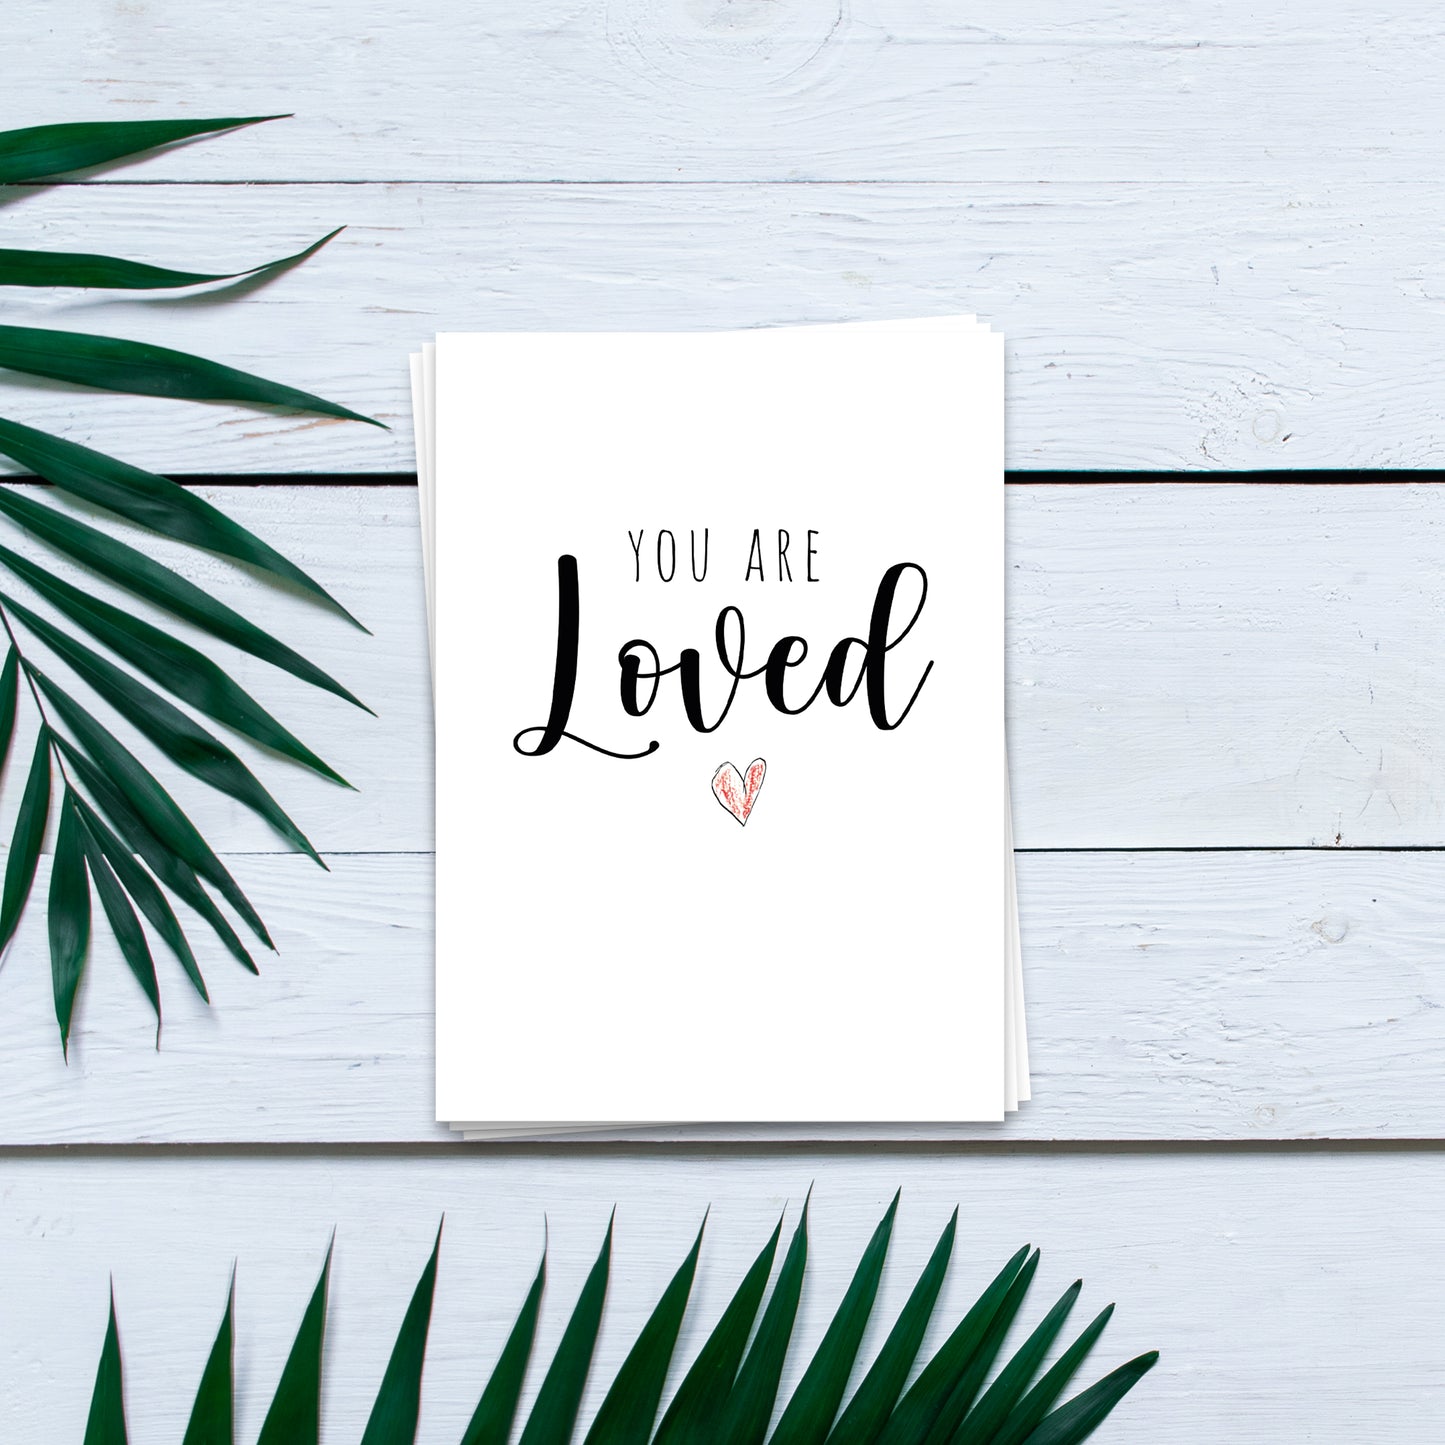 You are loved - Postkarte